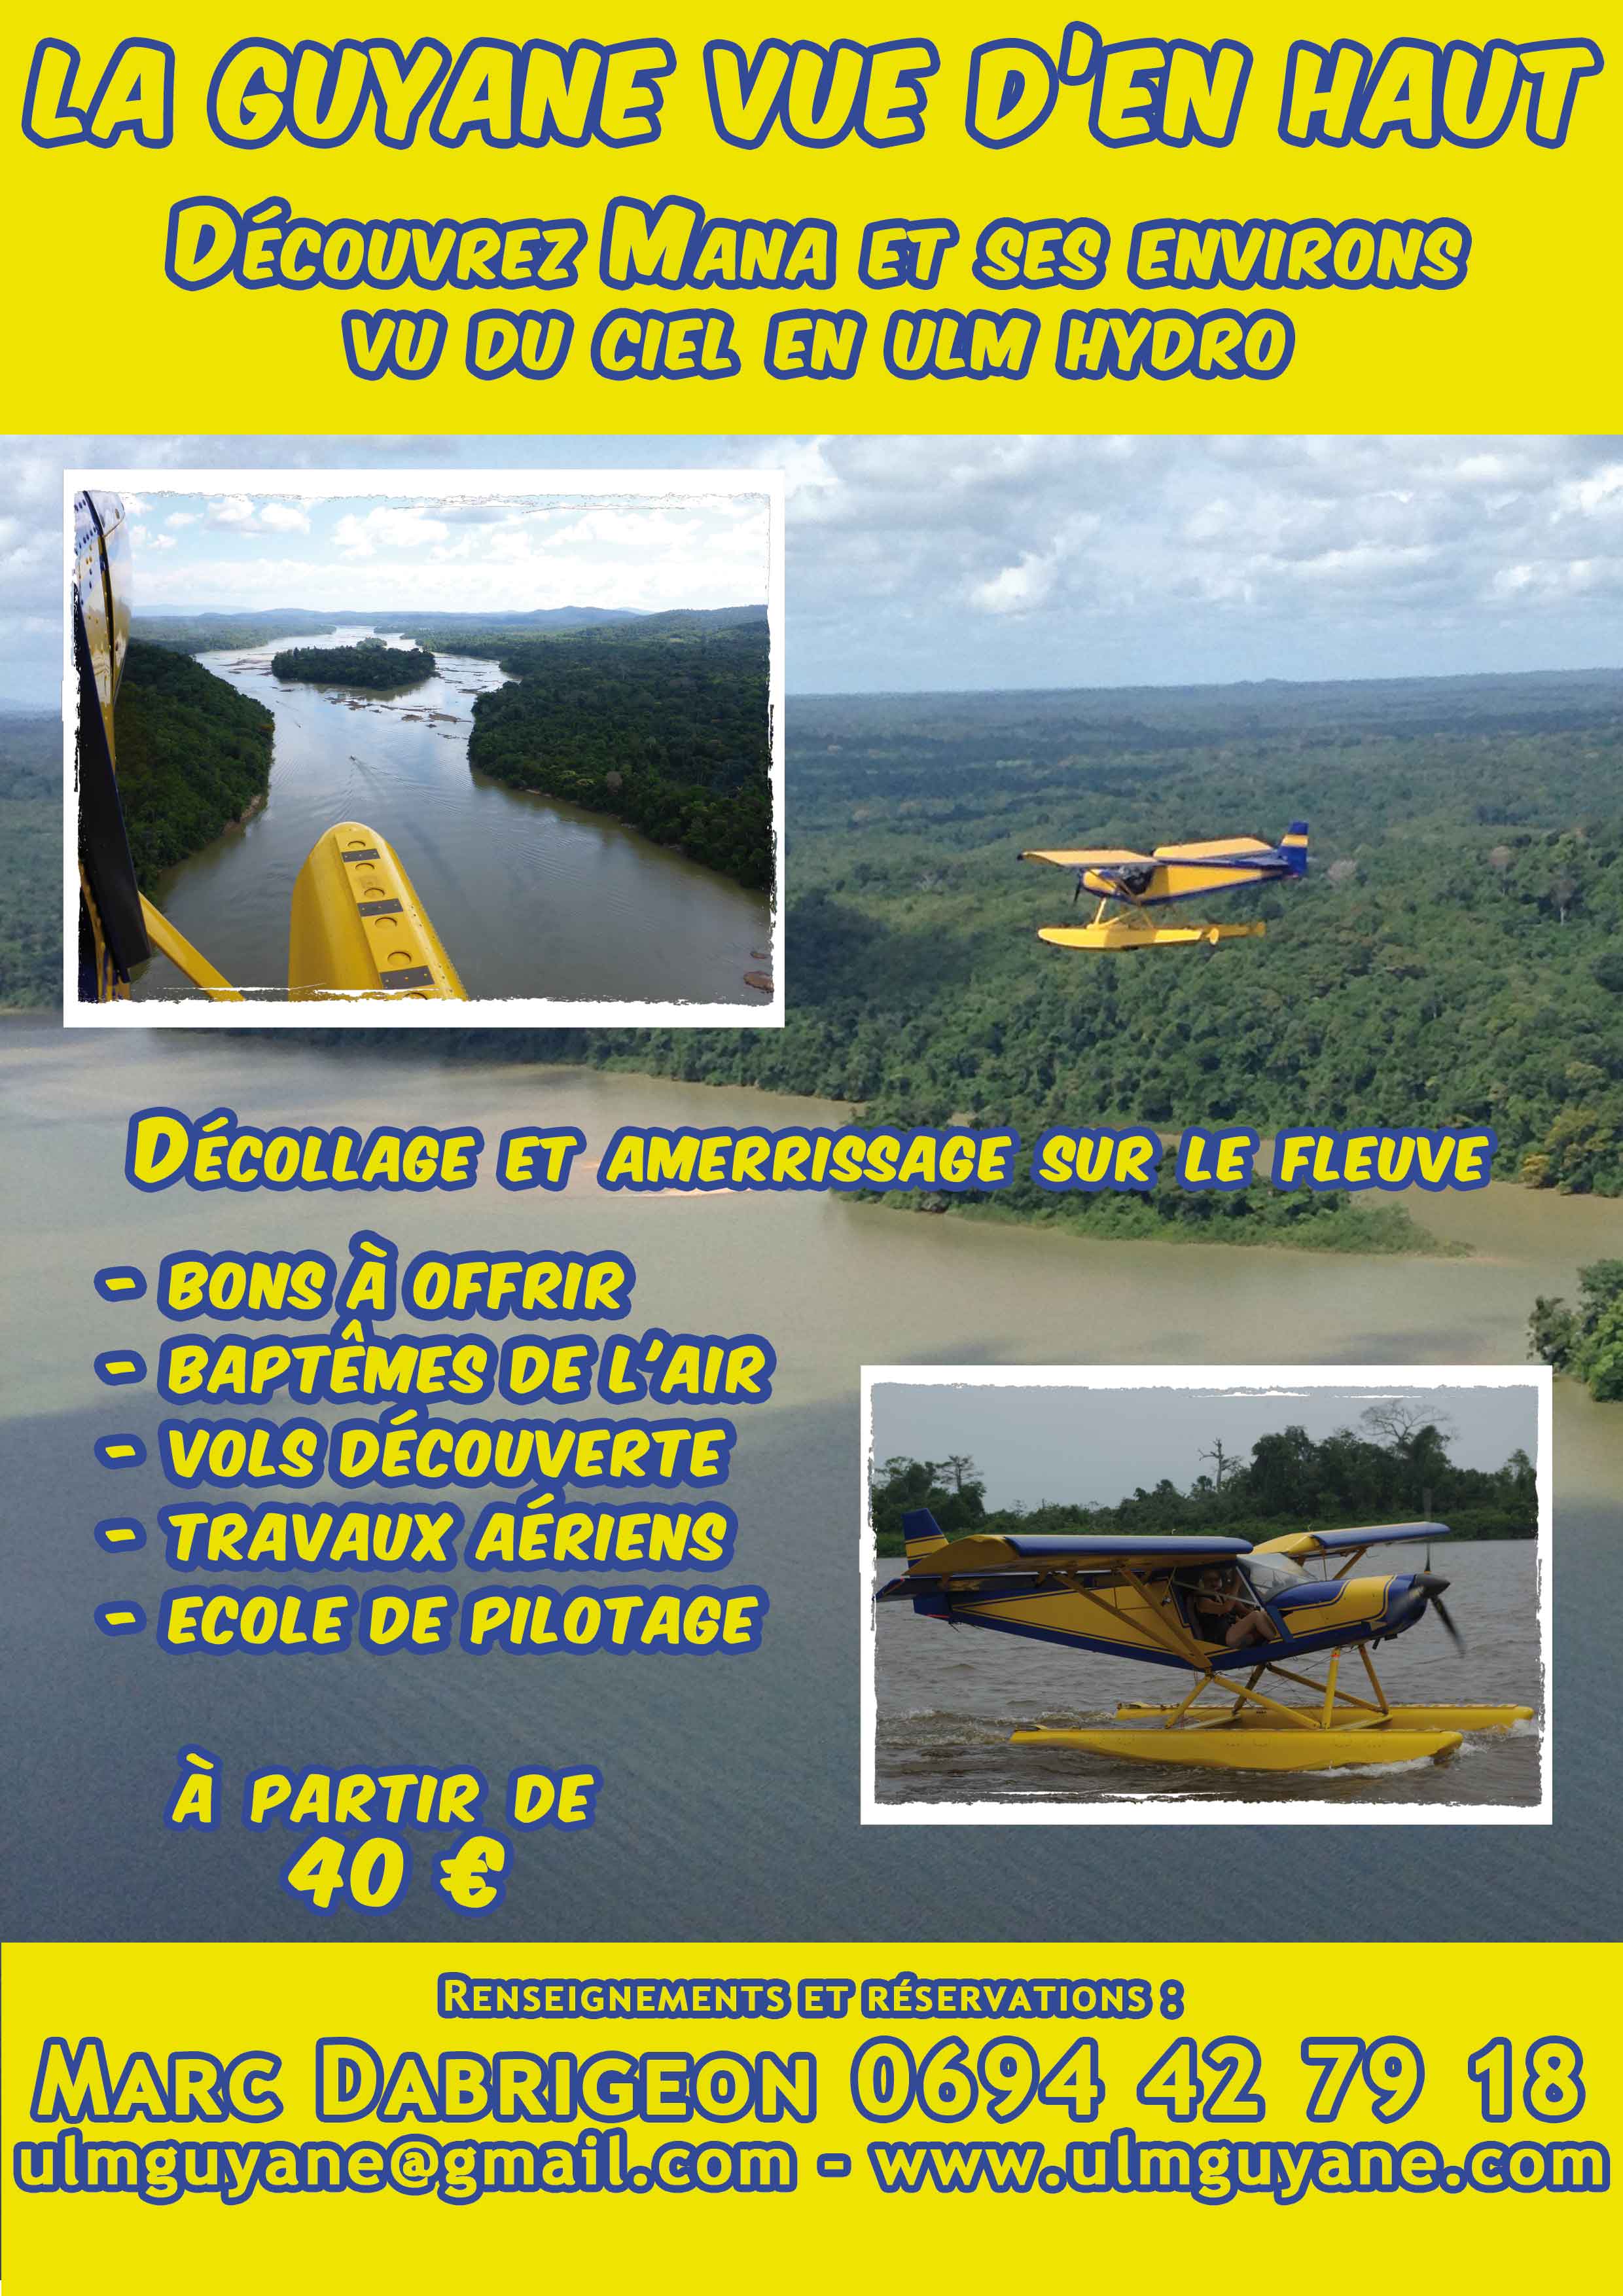 ULM Guyane - baptêmes, vols découverte et travail aérien en ULM hydro en Guyane